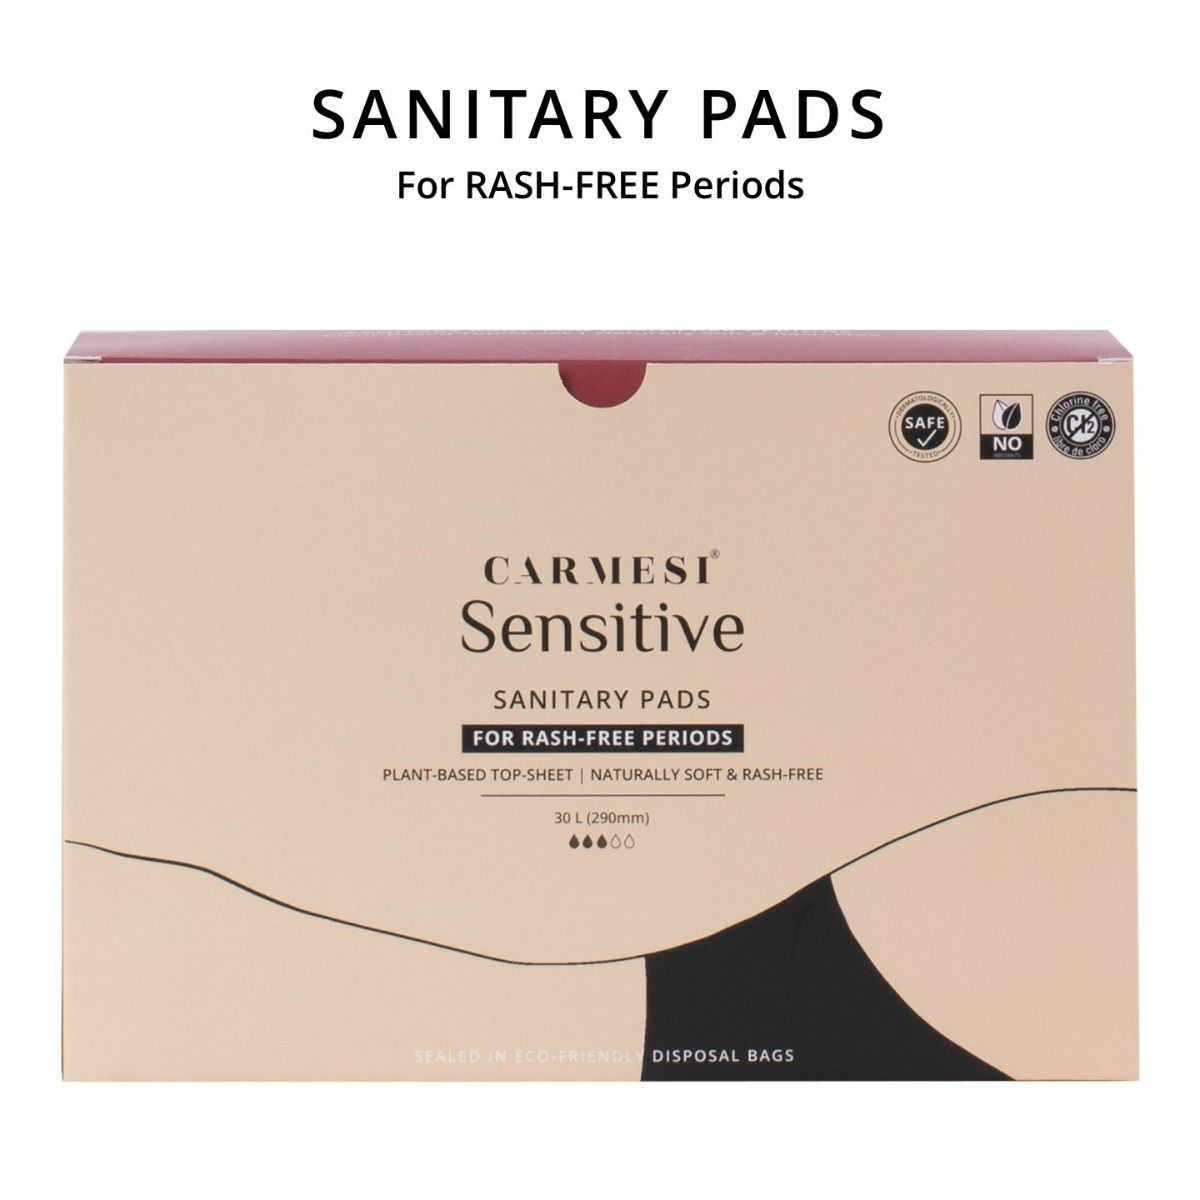 Carmesi Sensitive Sanitary Pads Large, 30 Count, Pack of 1 